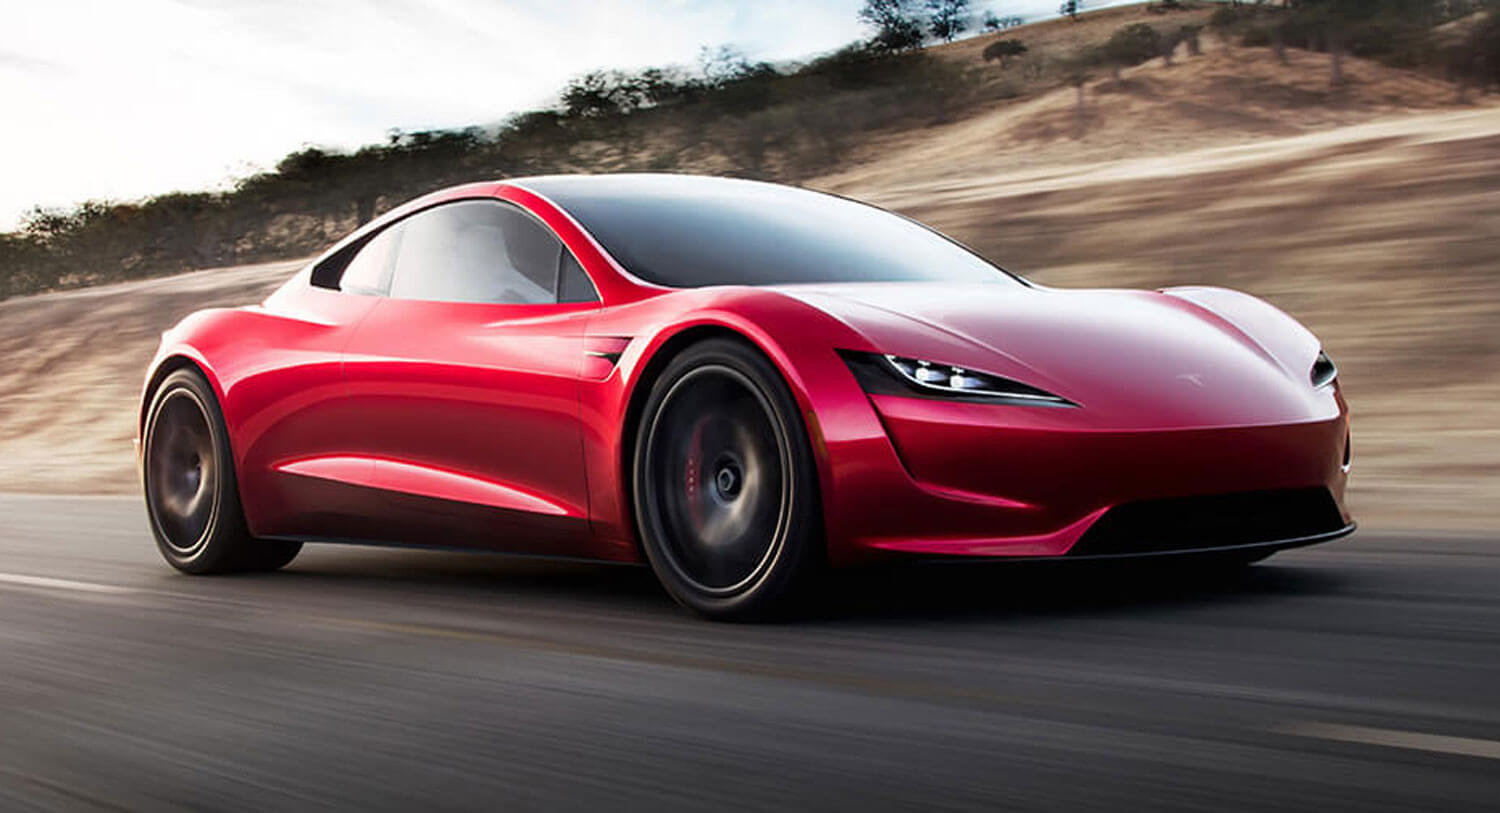 Elon Musk: Tesla Roadster Range Will Be “Above 1,000 Km”